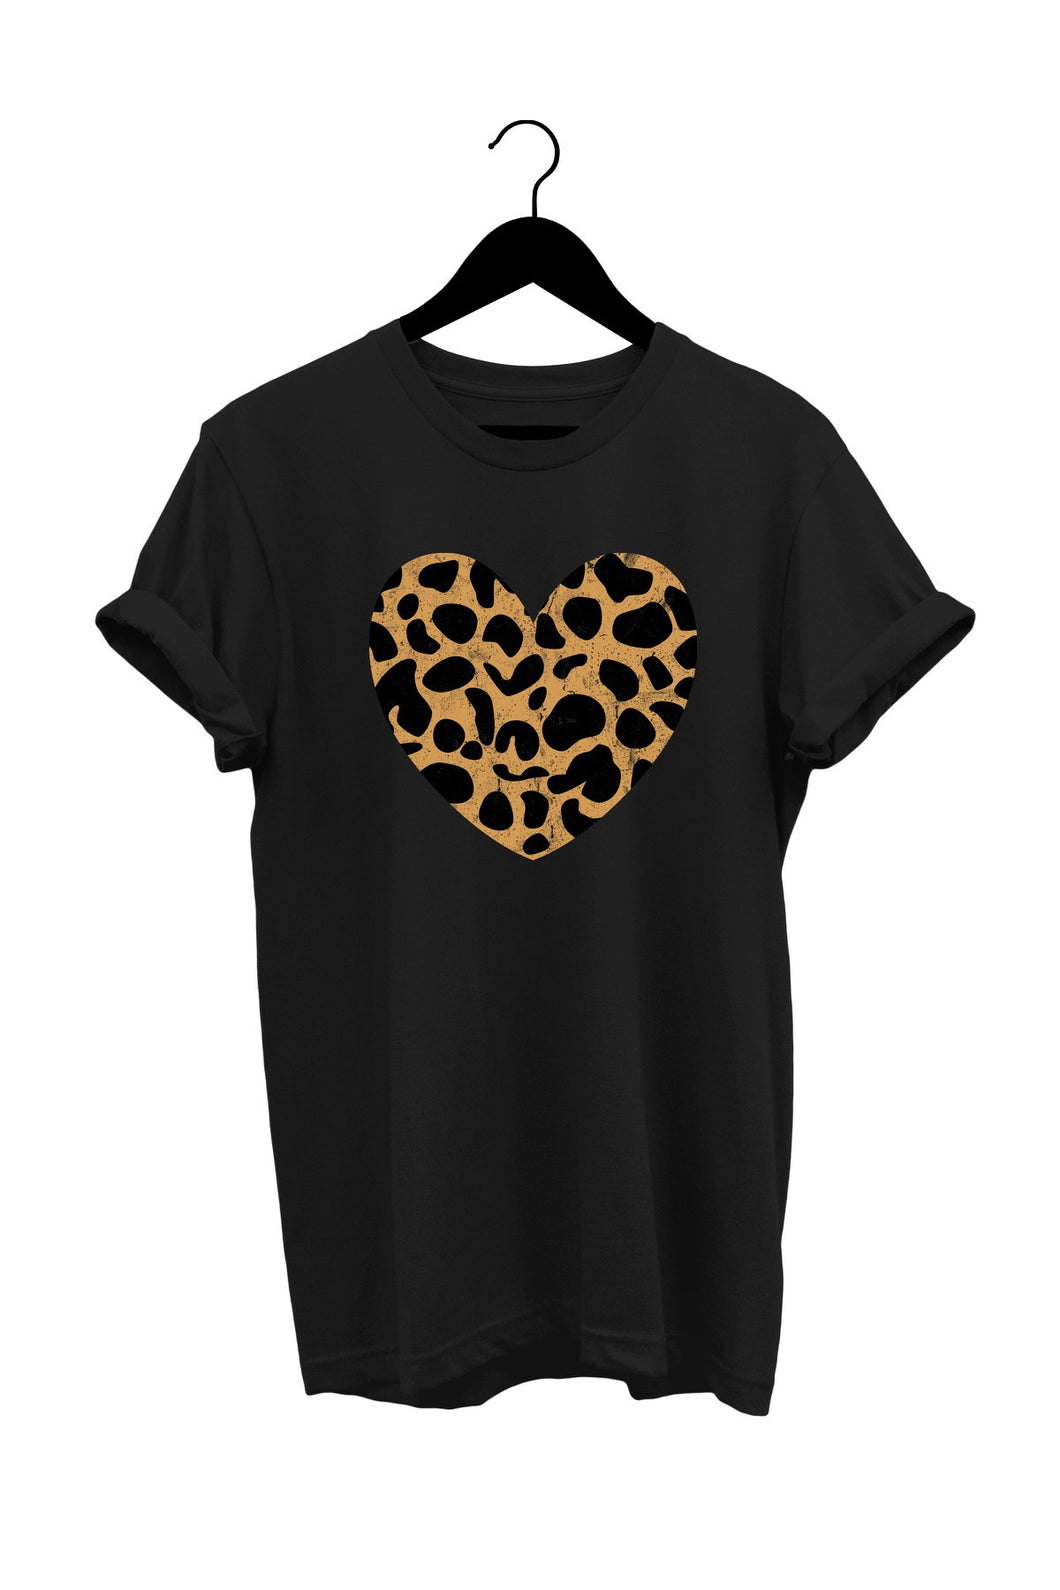 Leopard heart GRAPHIC T-SHIRT